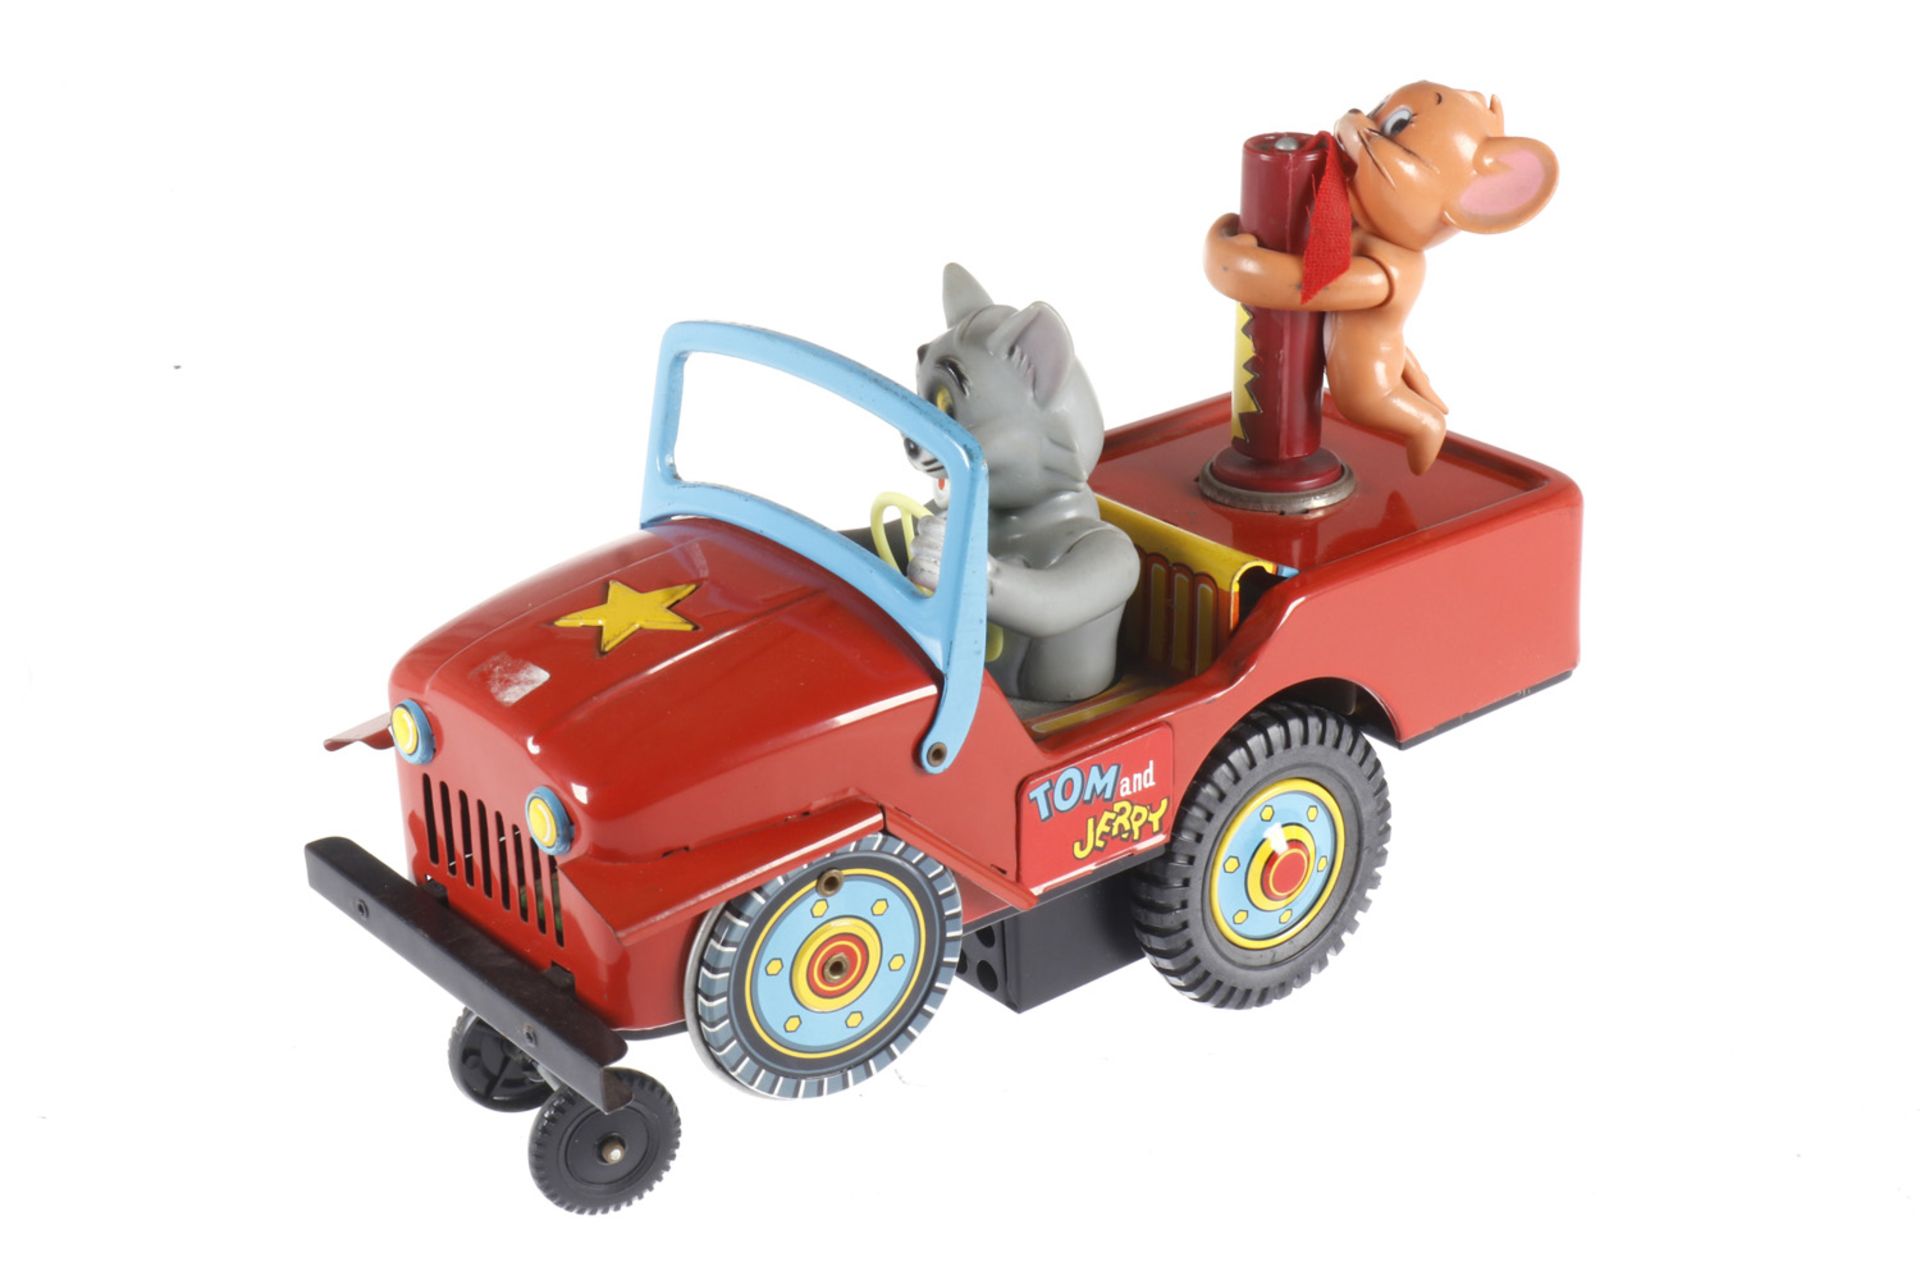 TM Jeep "Tom and Jerry", Japan, Blech/Kunststoff, batteriebetrieben, Alterungsspuren, L 27, sonst